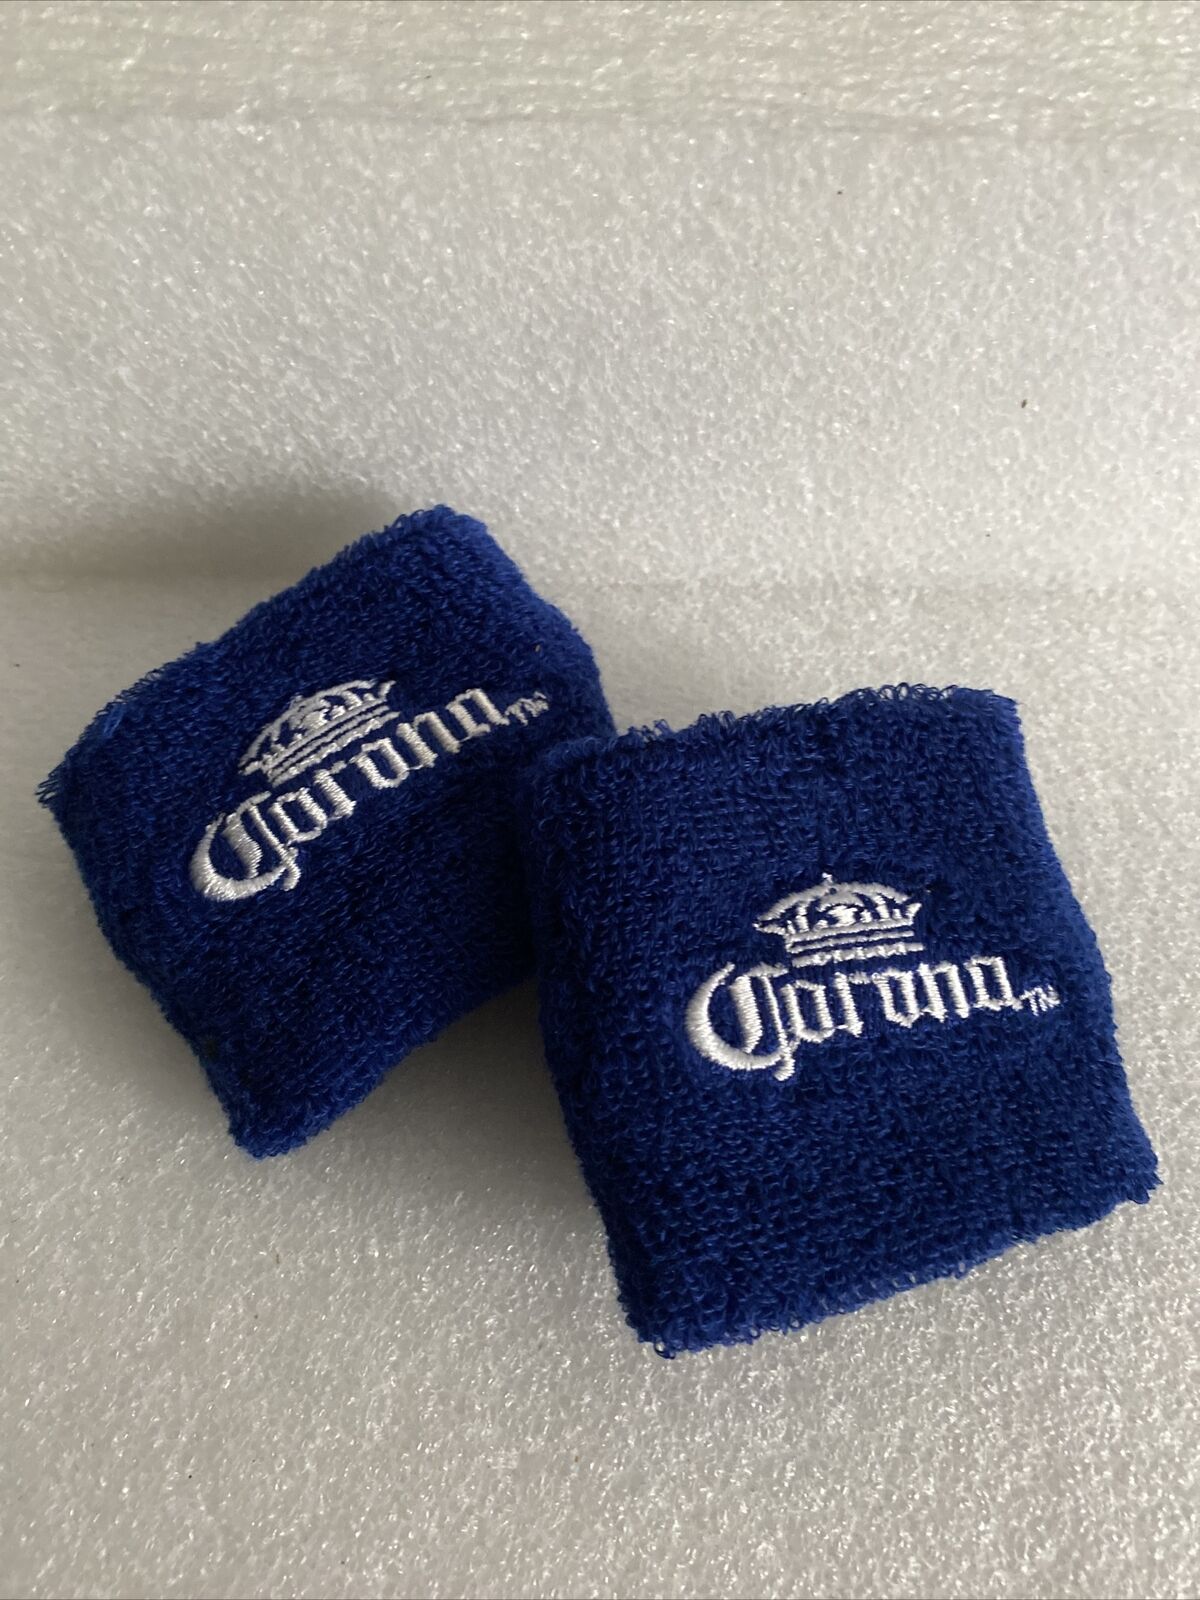 Corona Beer Promotional Wrist Sweat Bands Lot Of 2 Nip  Free U. S. Shipping-blue